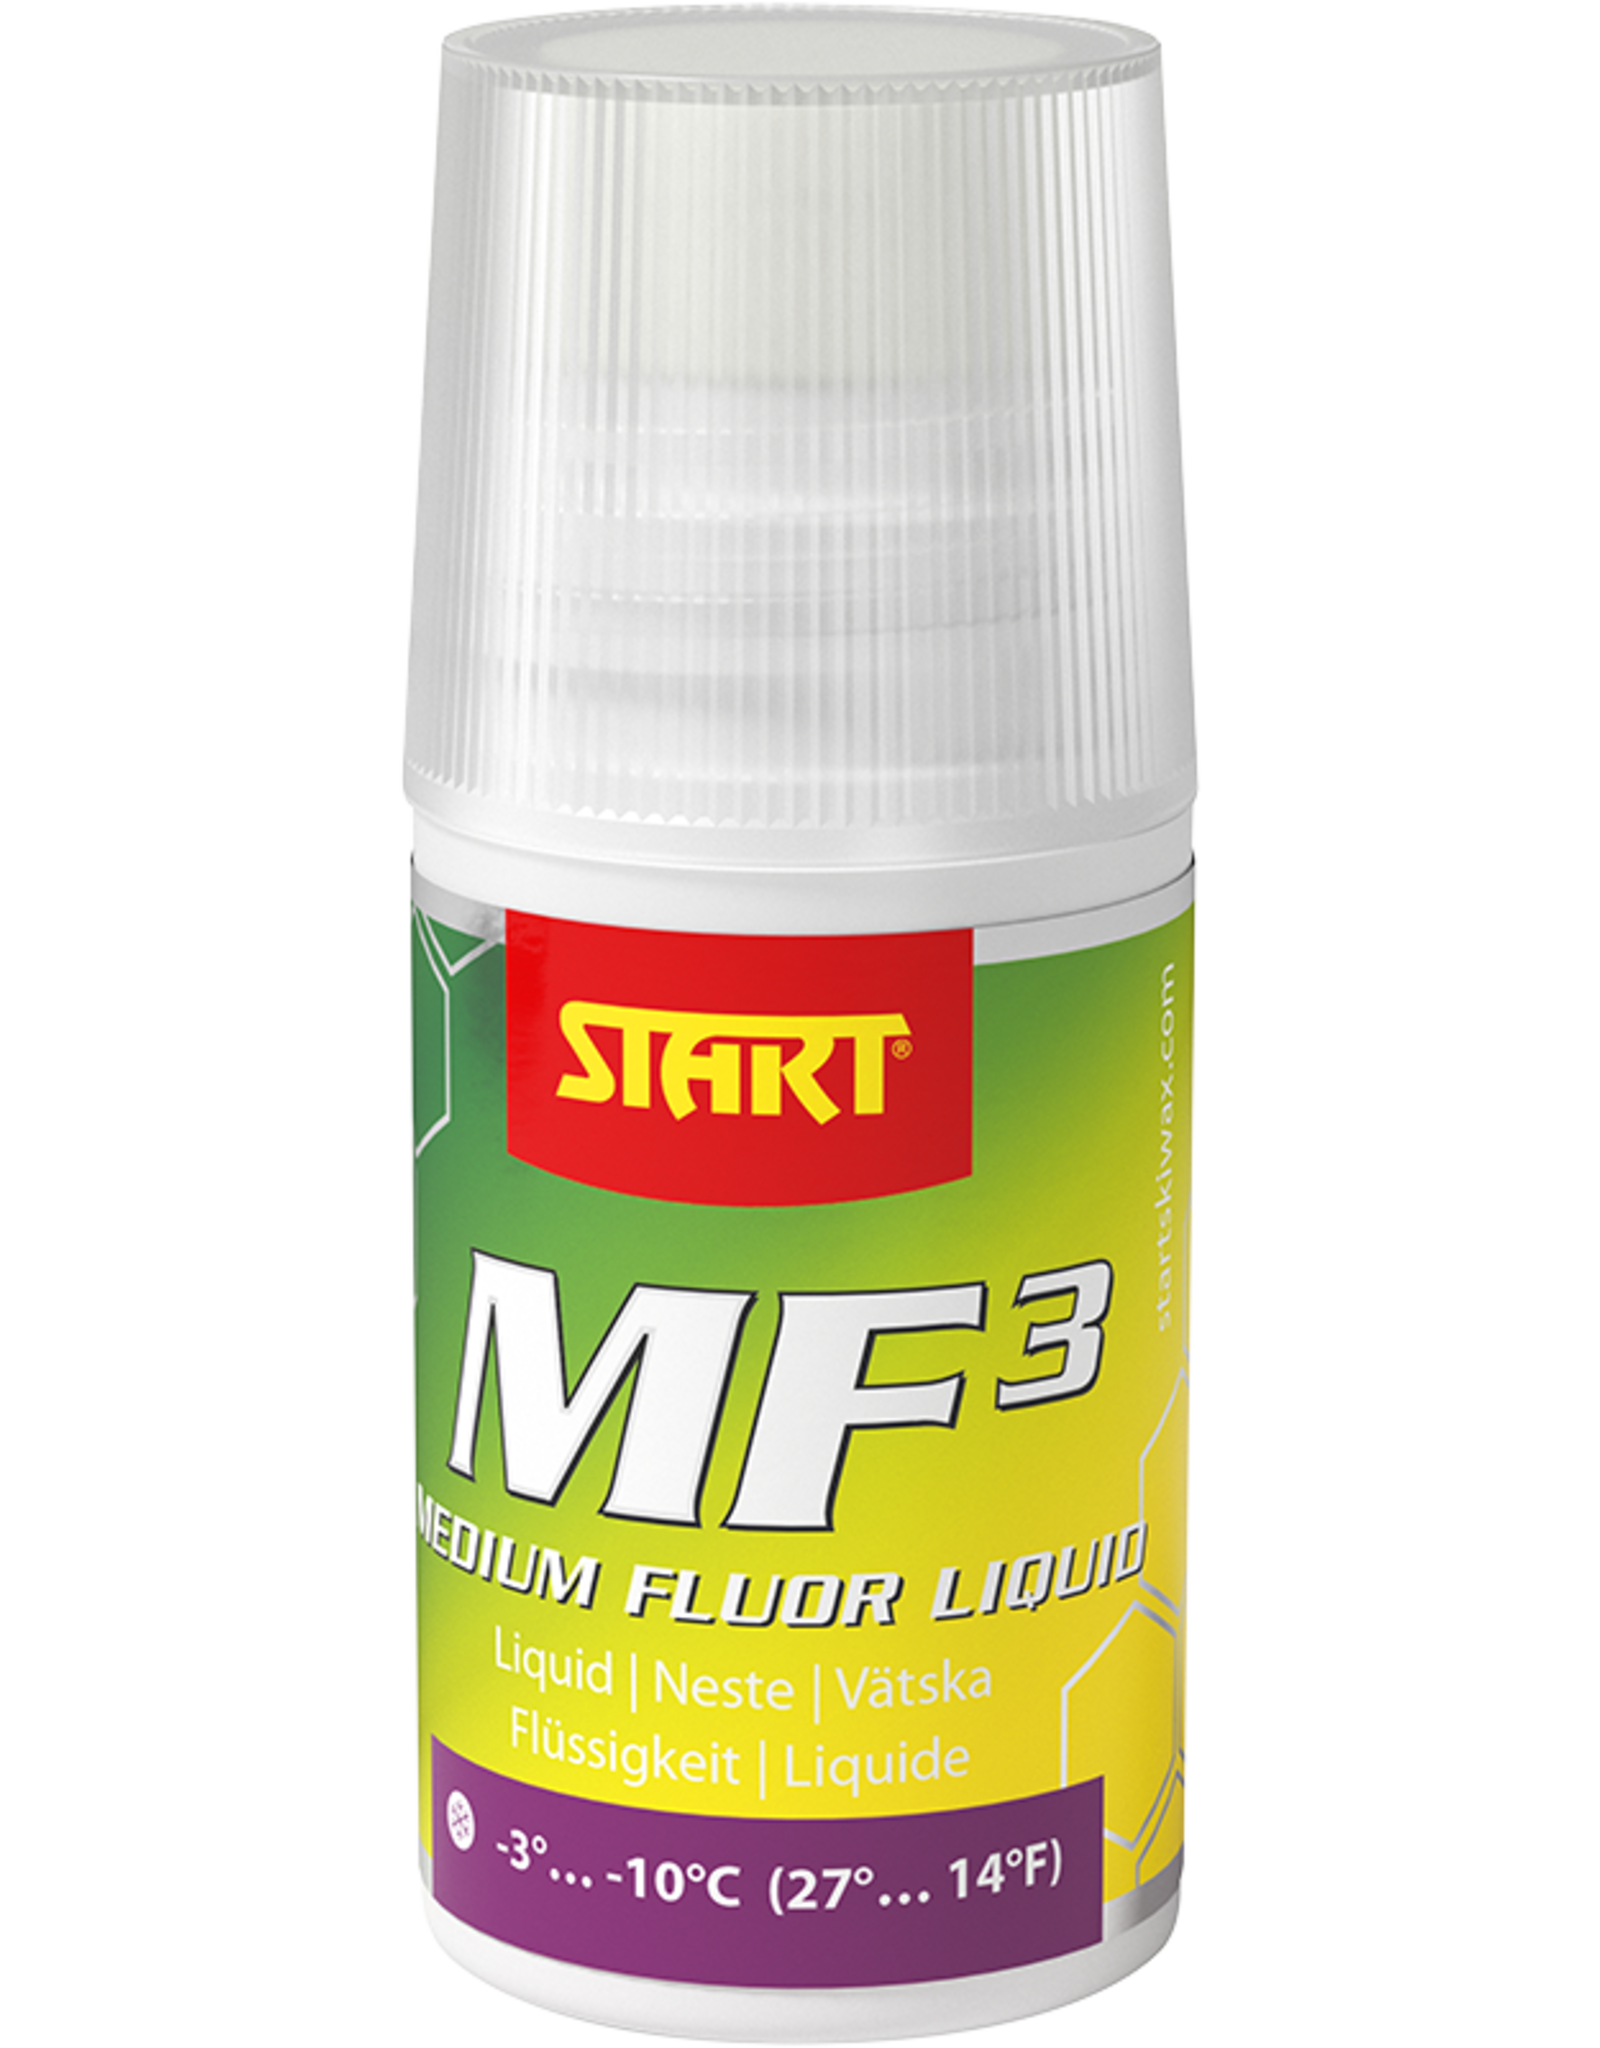 Start Start MF3 Medium Fluor Liquid